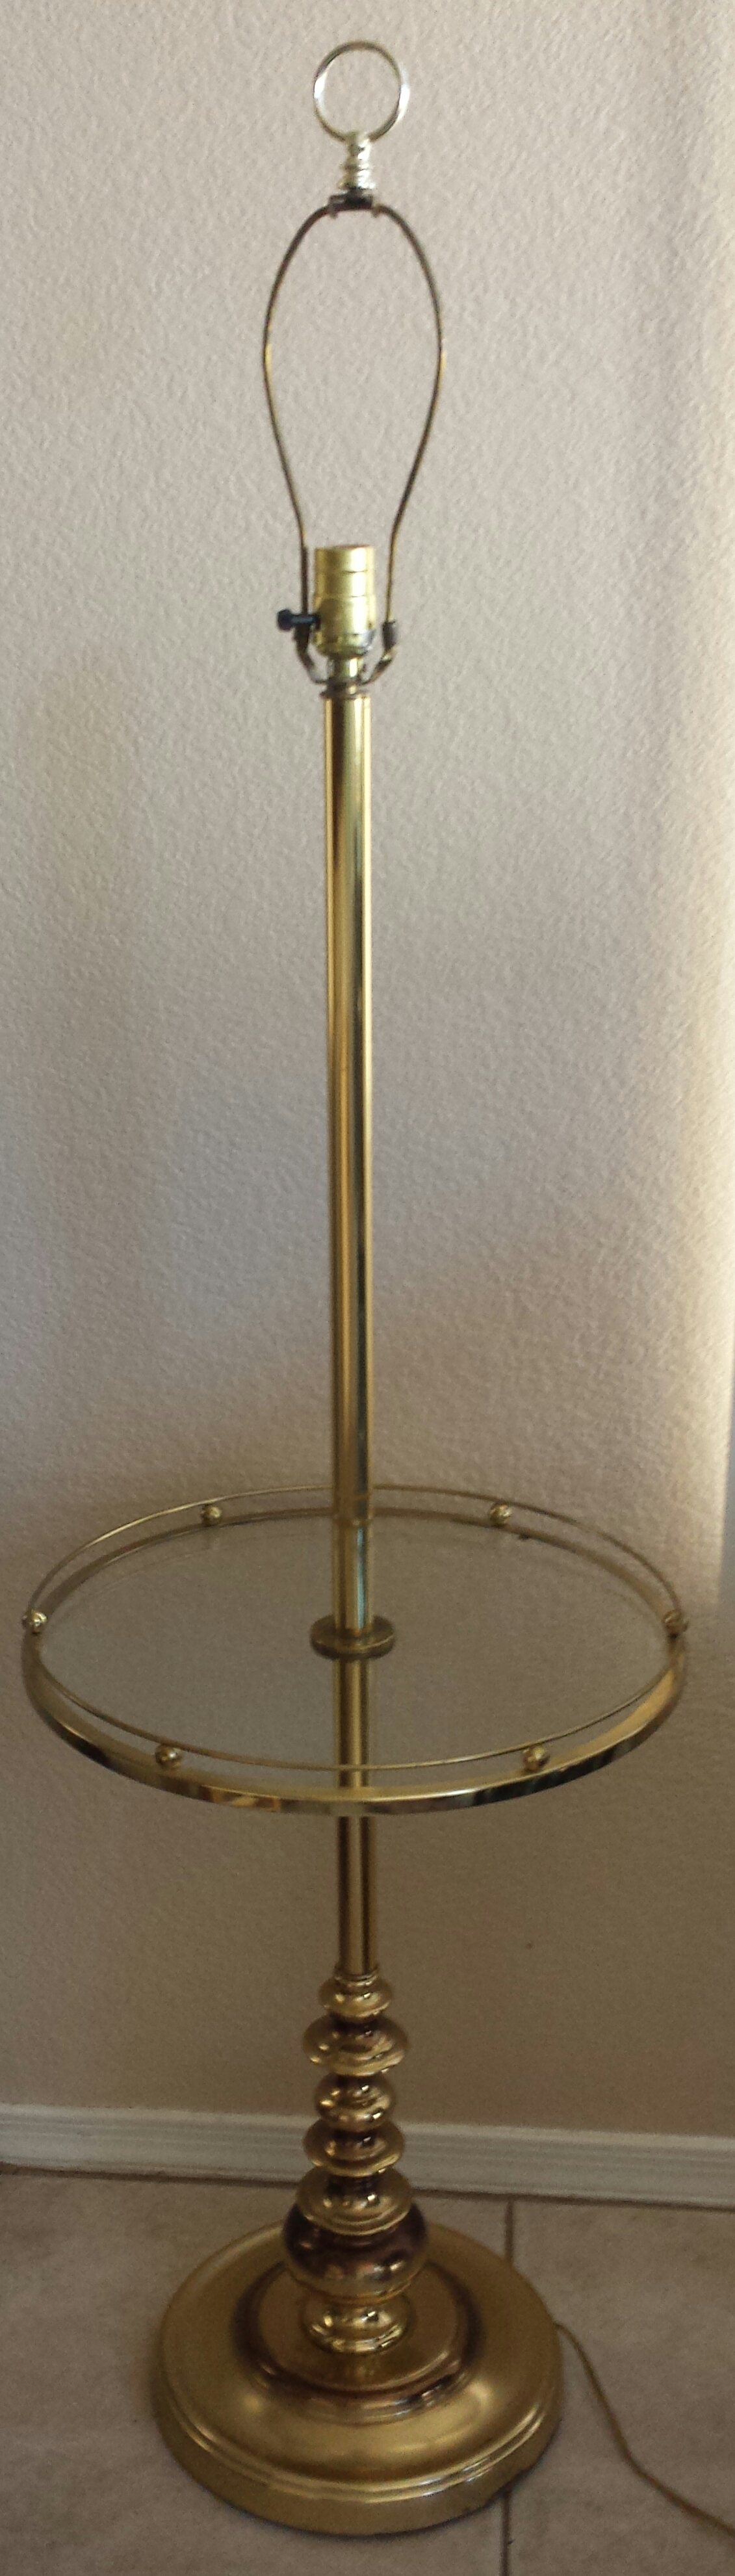 Gold Mid-Century Stiffel Brass & Glass Shelf Floor Lamp For Sale - Image 8